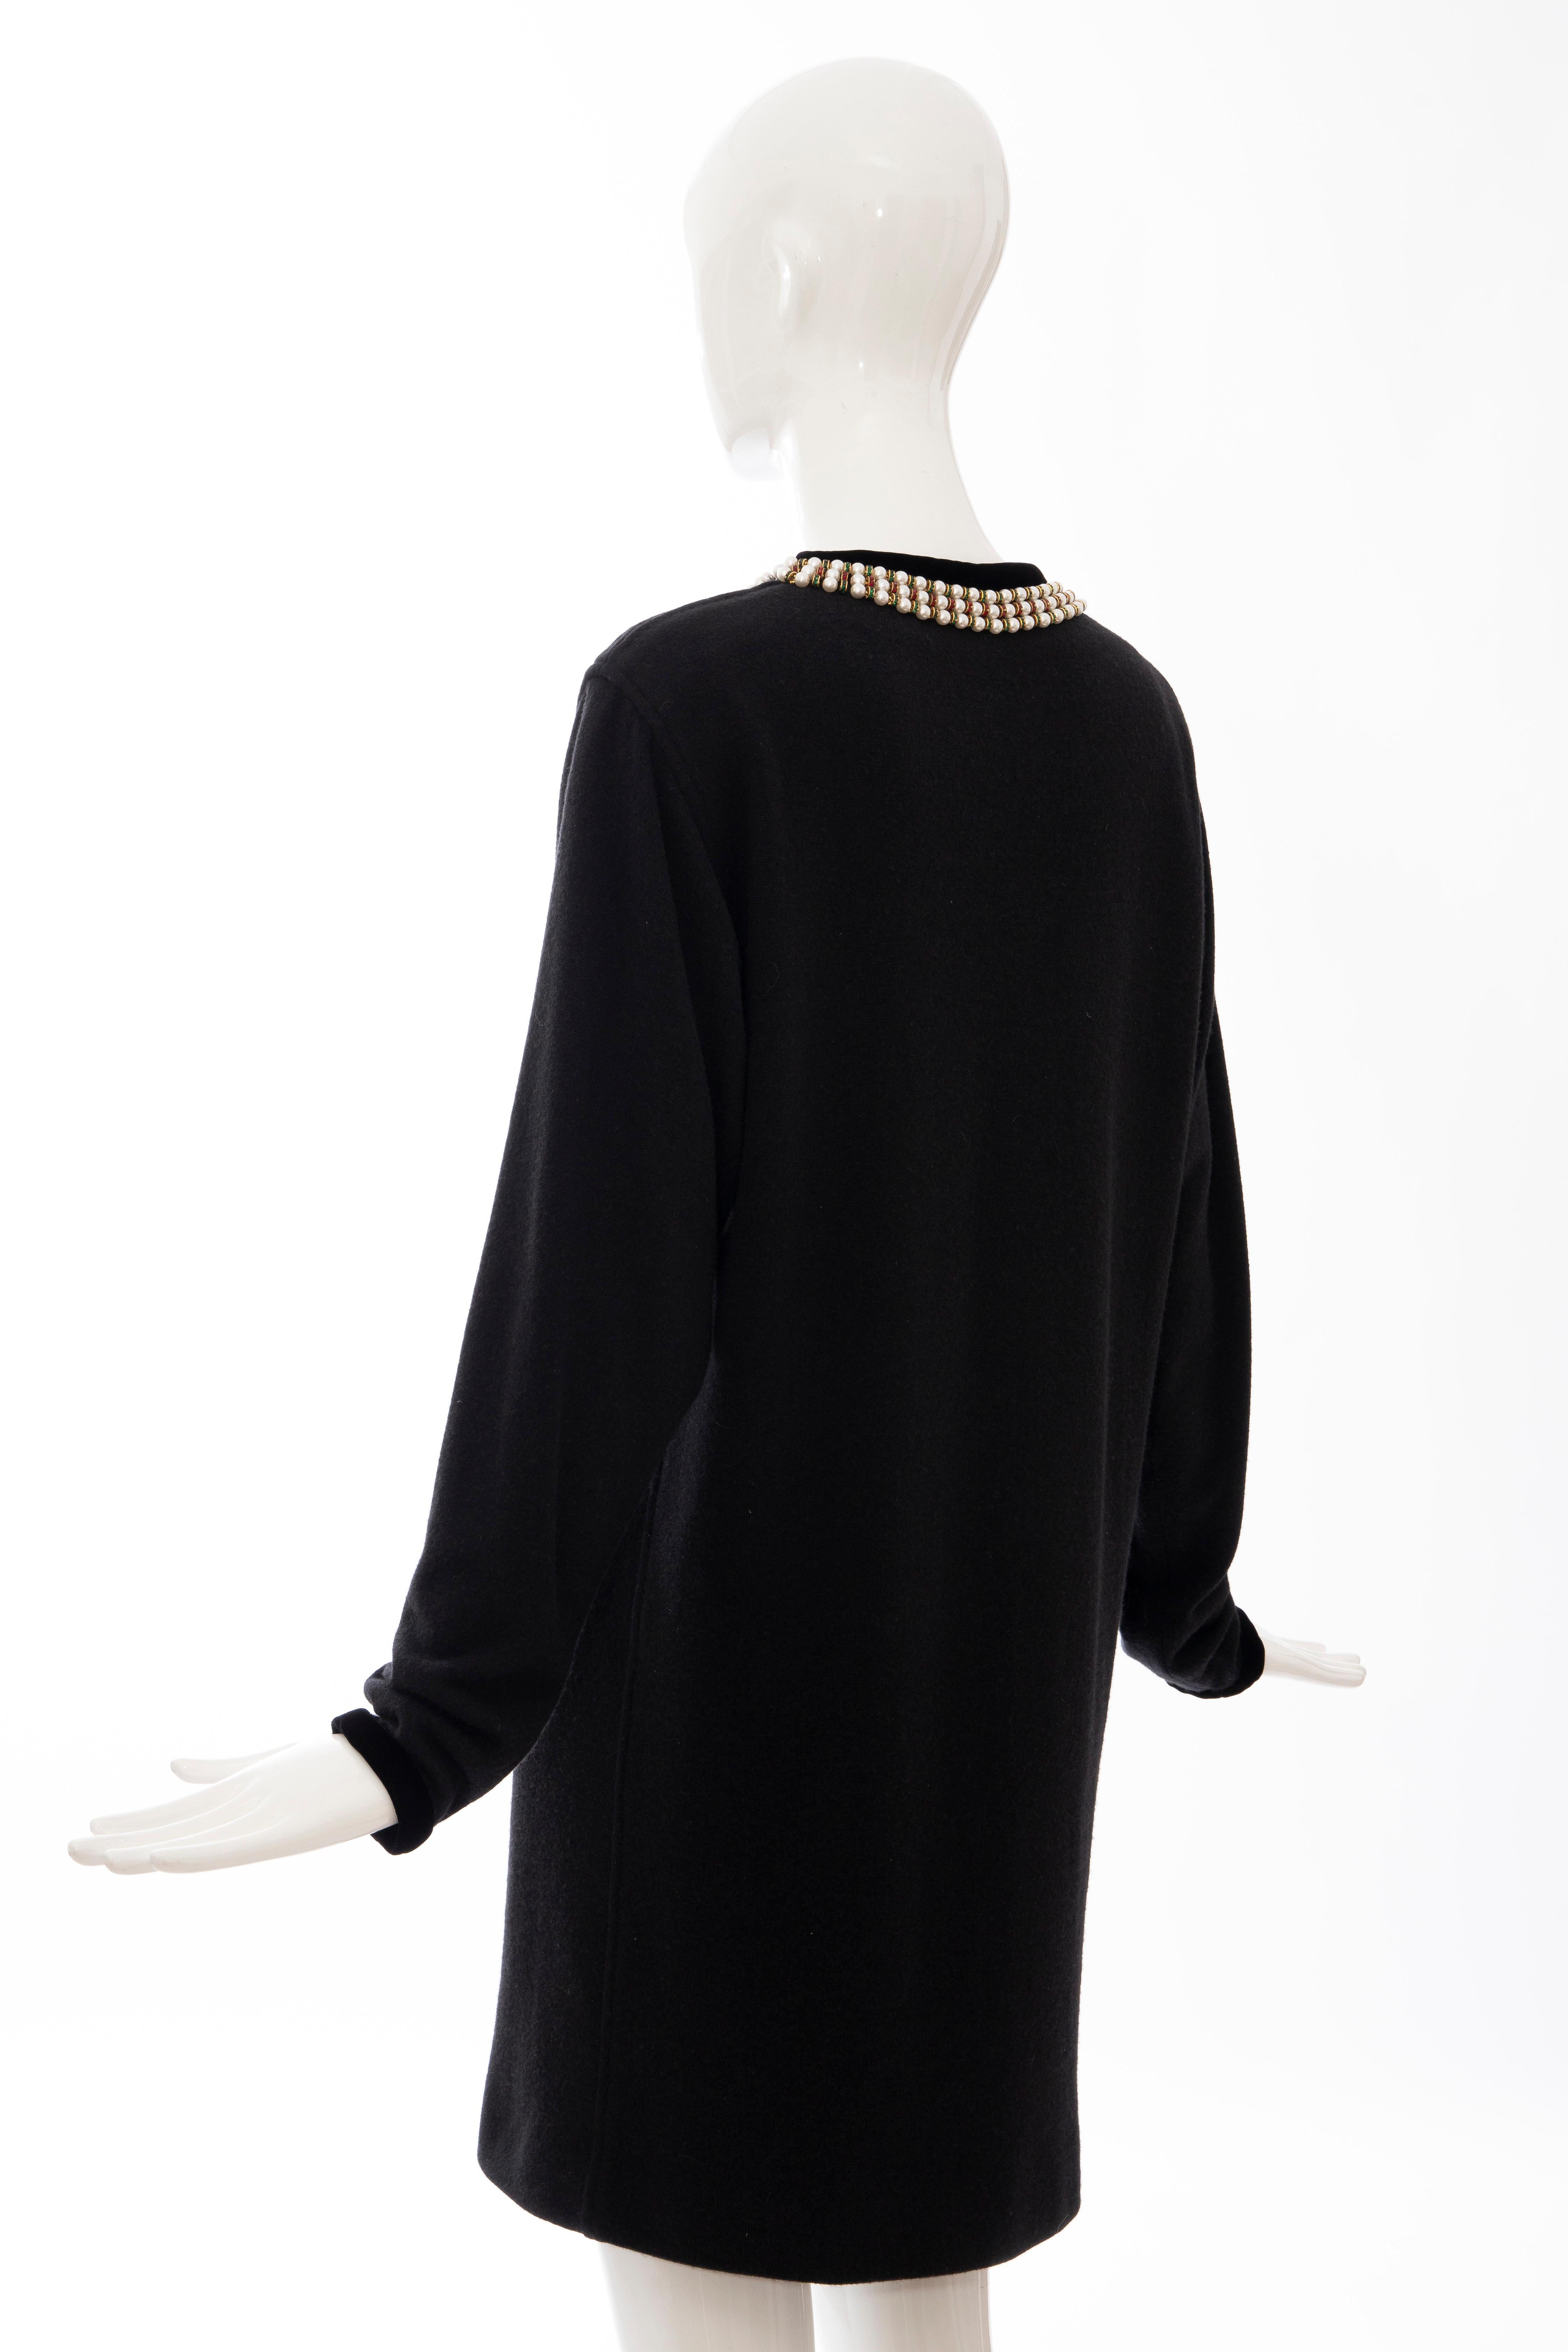 Oscar de la Renta Runway Black Embroidered Neckline Sweater Dress, Fall 1984 For Sale 4